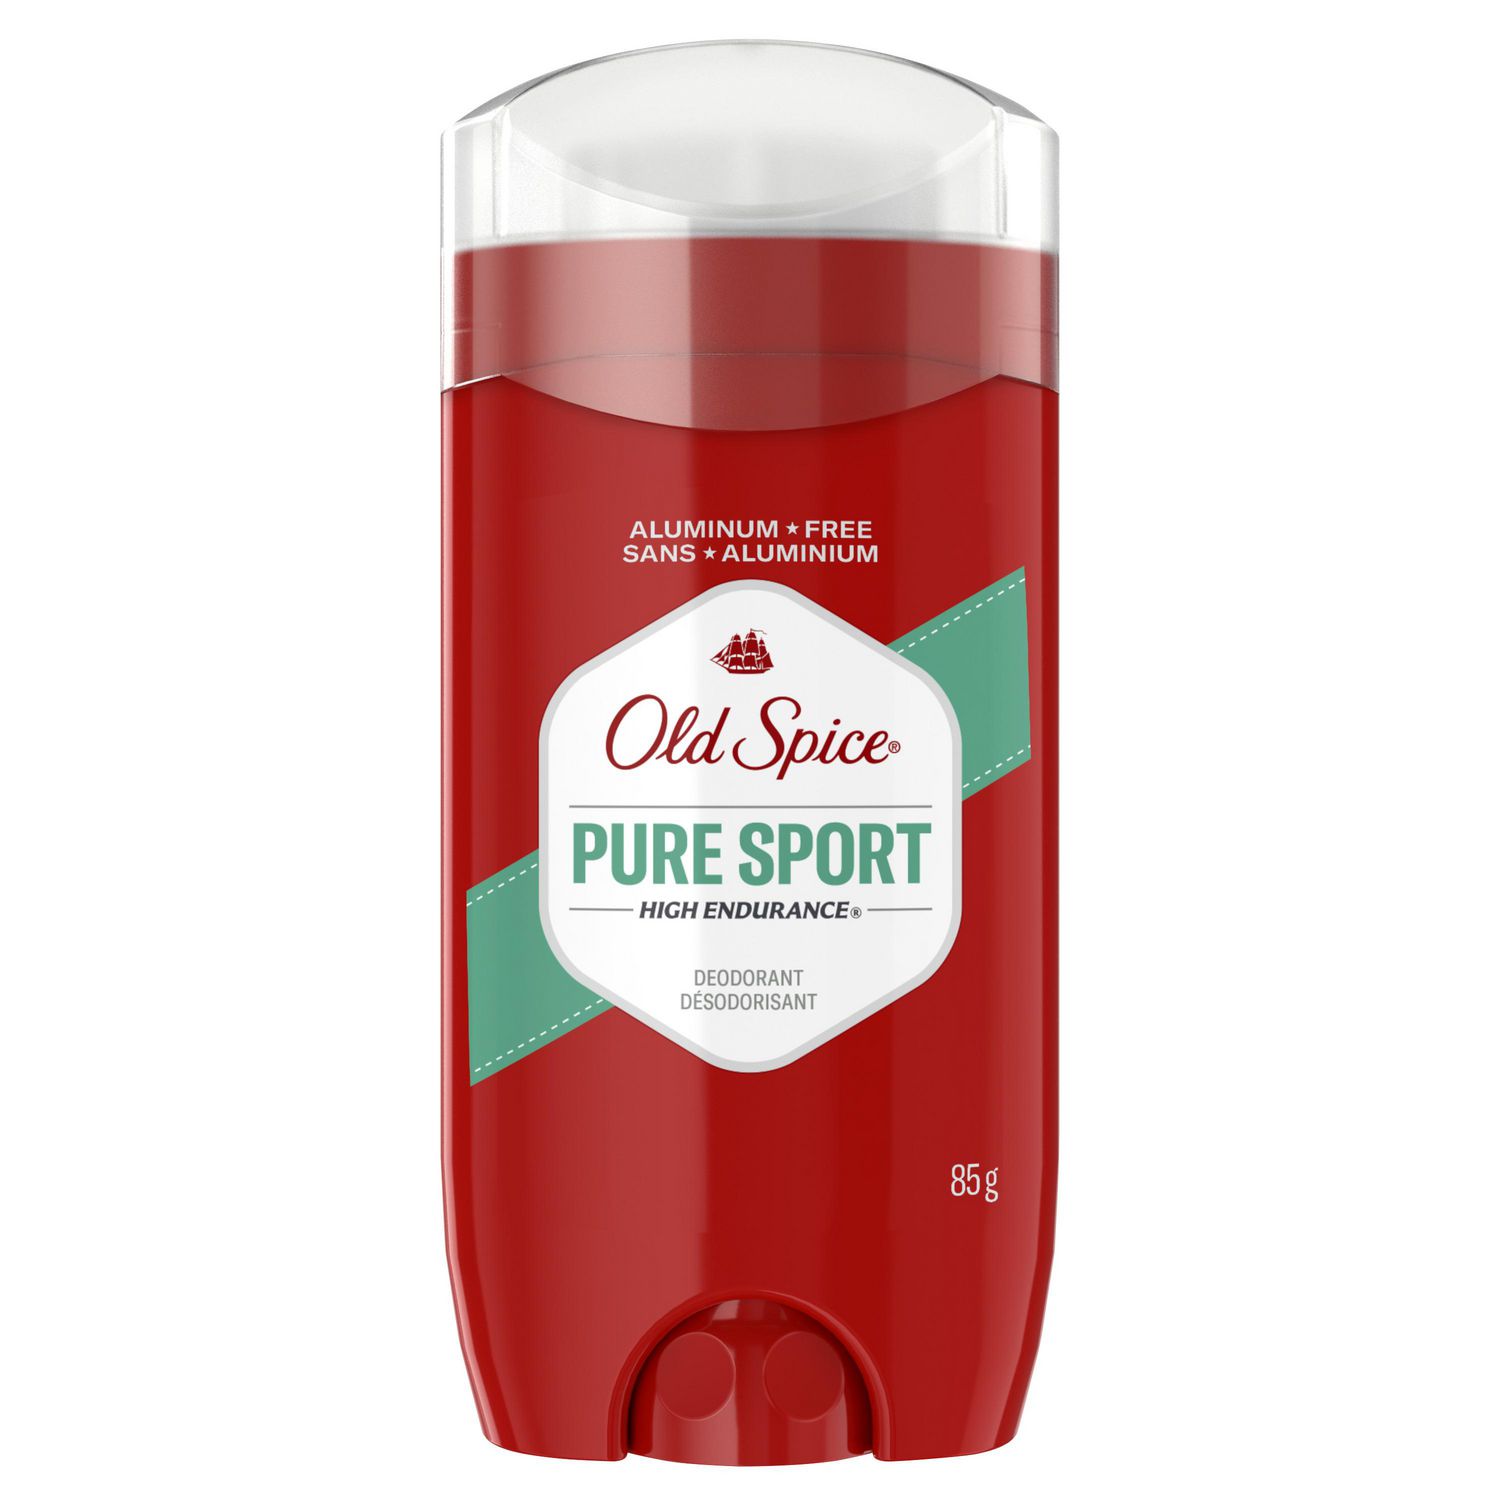 Old Spice Pure Sport High Endurance Deodorant Walmart Canada